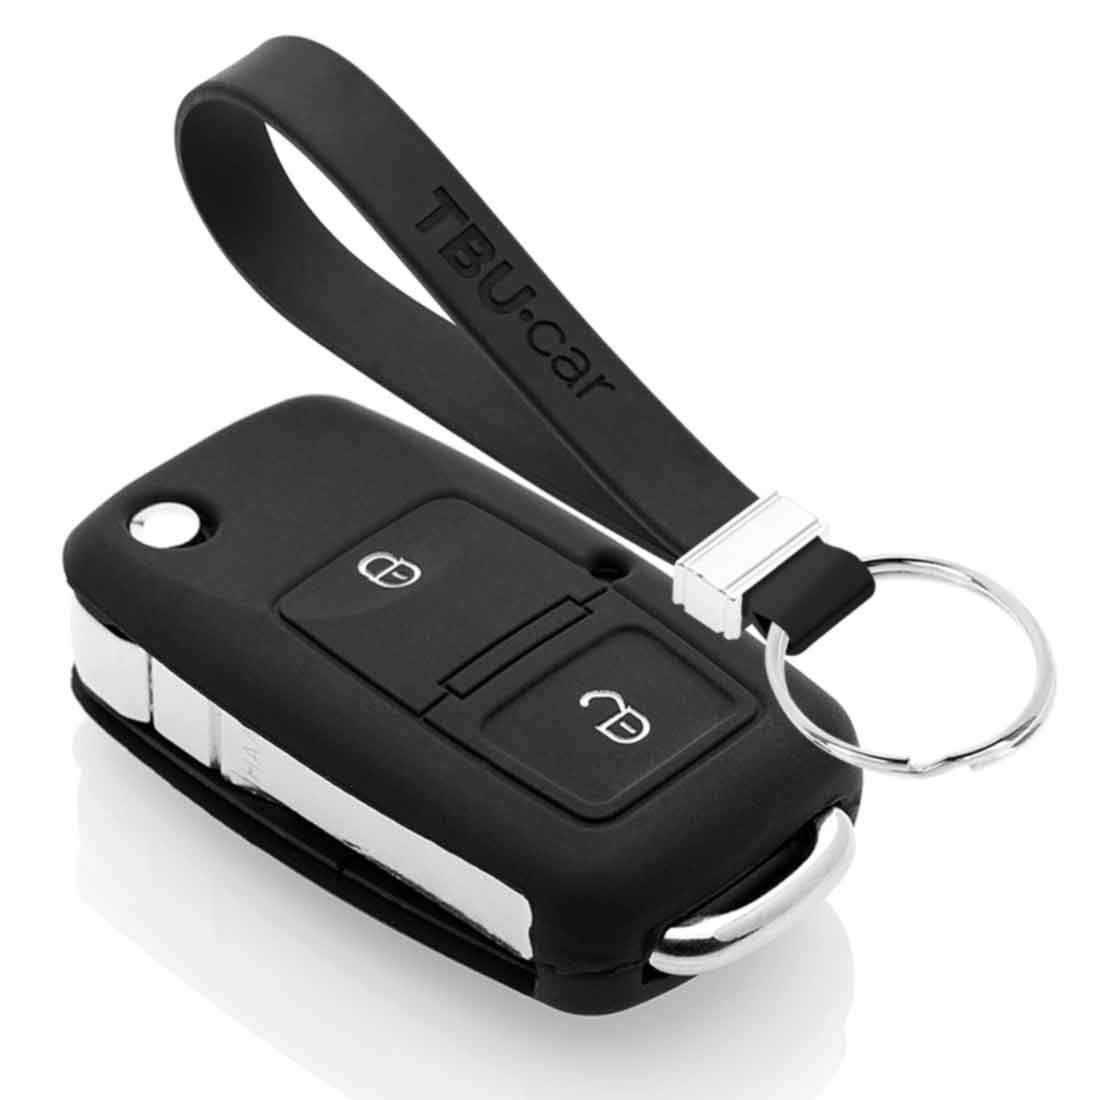 Hülle für VW Golf 8 Autoschlüssel Schutzhülle Schlüssel Case Key Cover